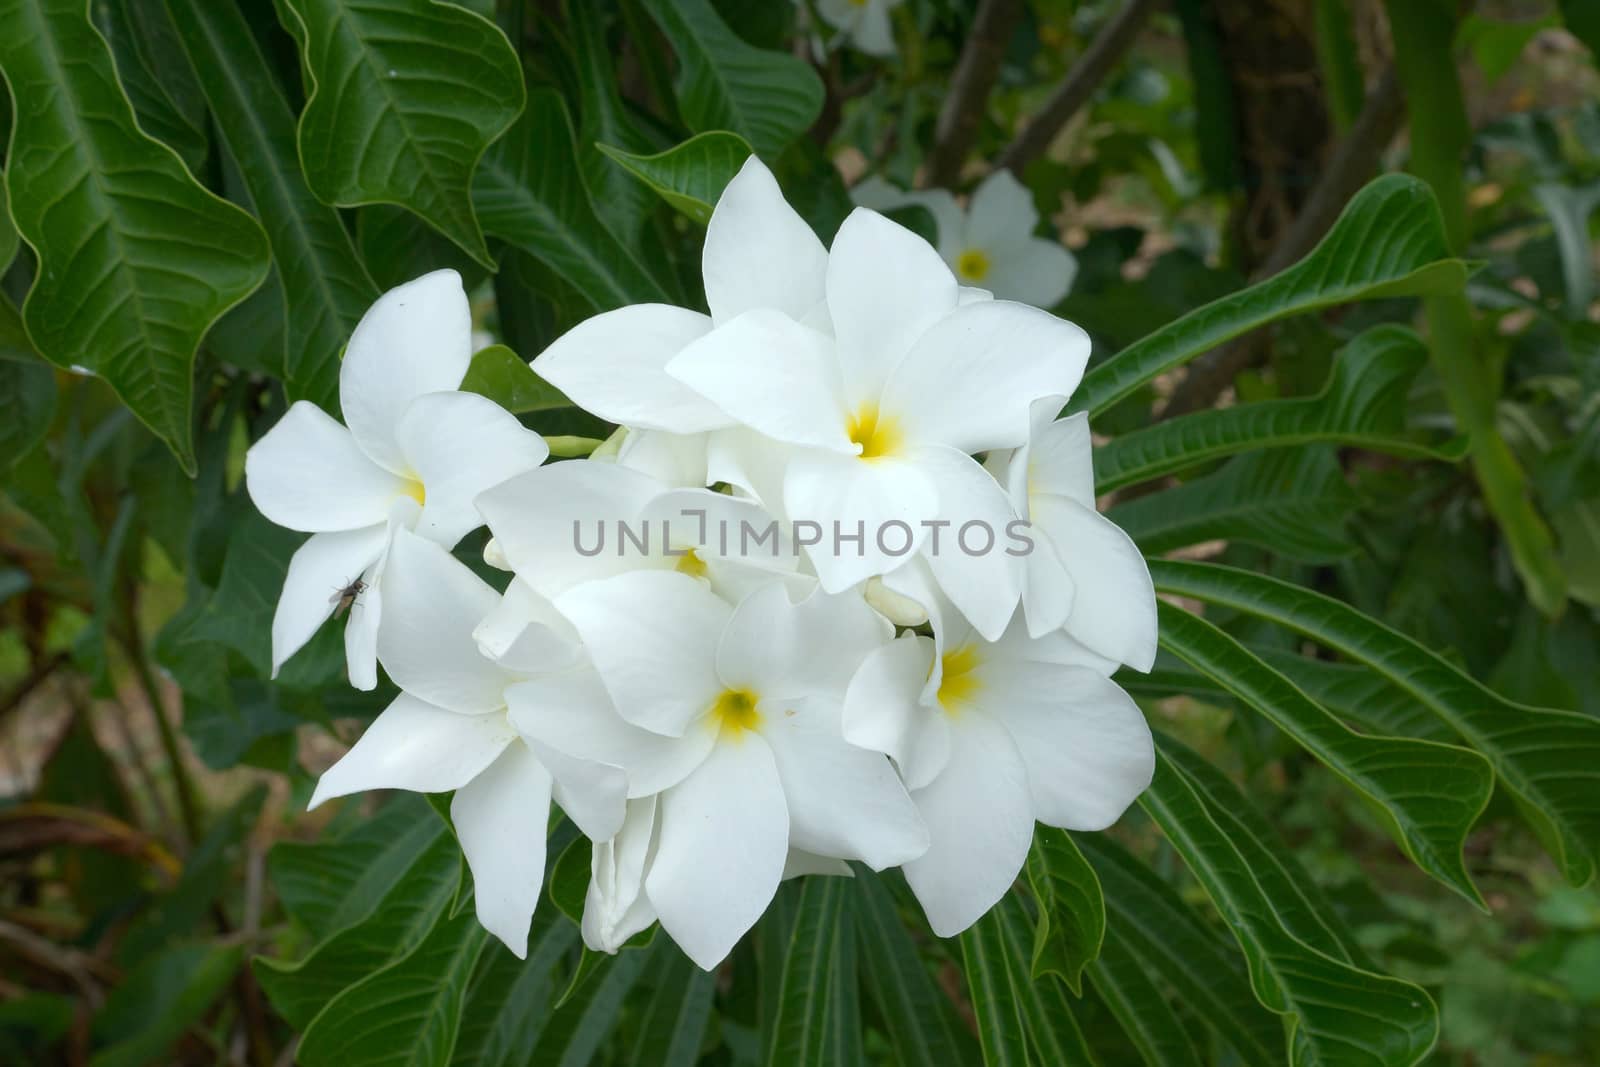 Branch of tropical white flowers frangipani (plumeria) on dark green leaves background